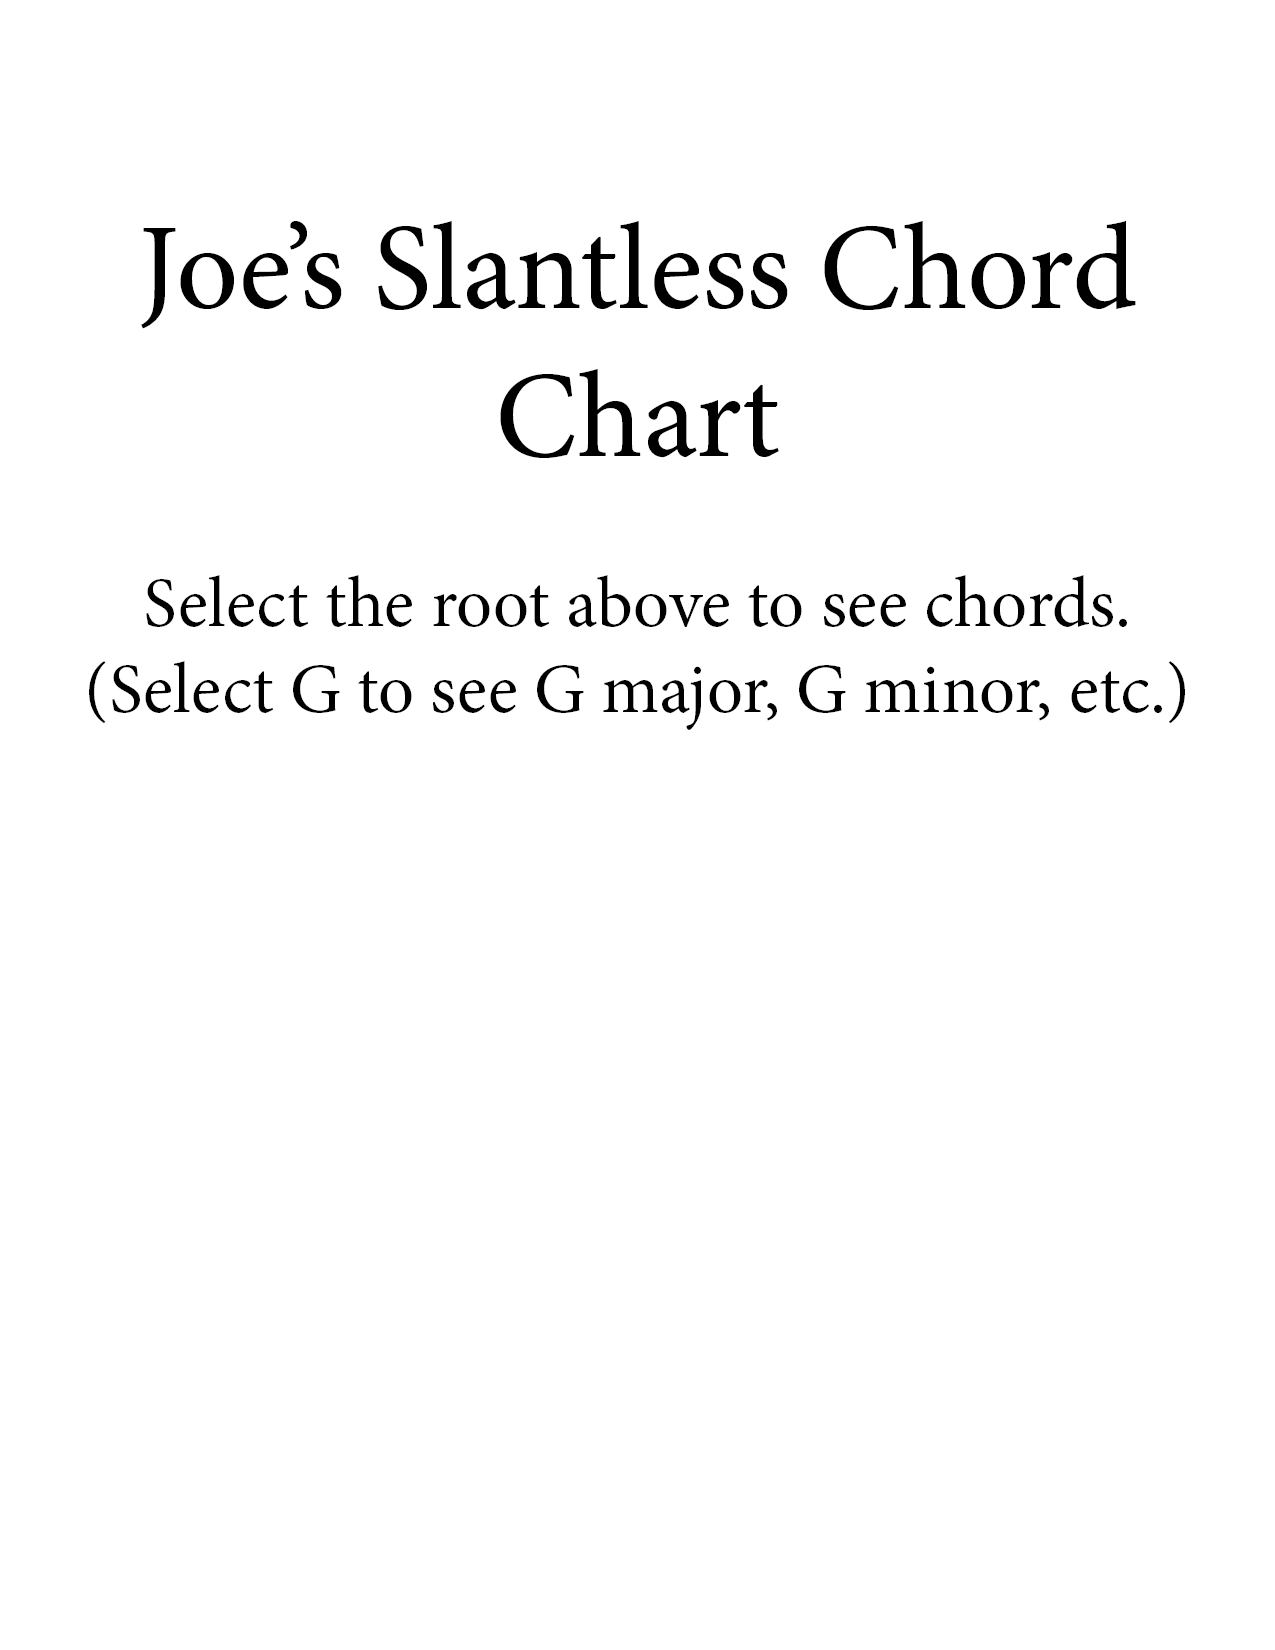 Joe's Slantless Chord Chart TAB - Portrait